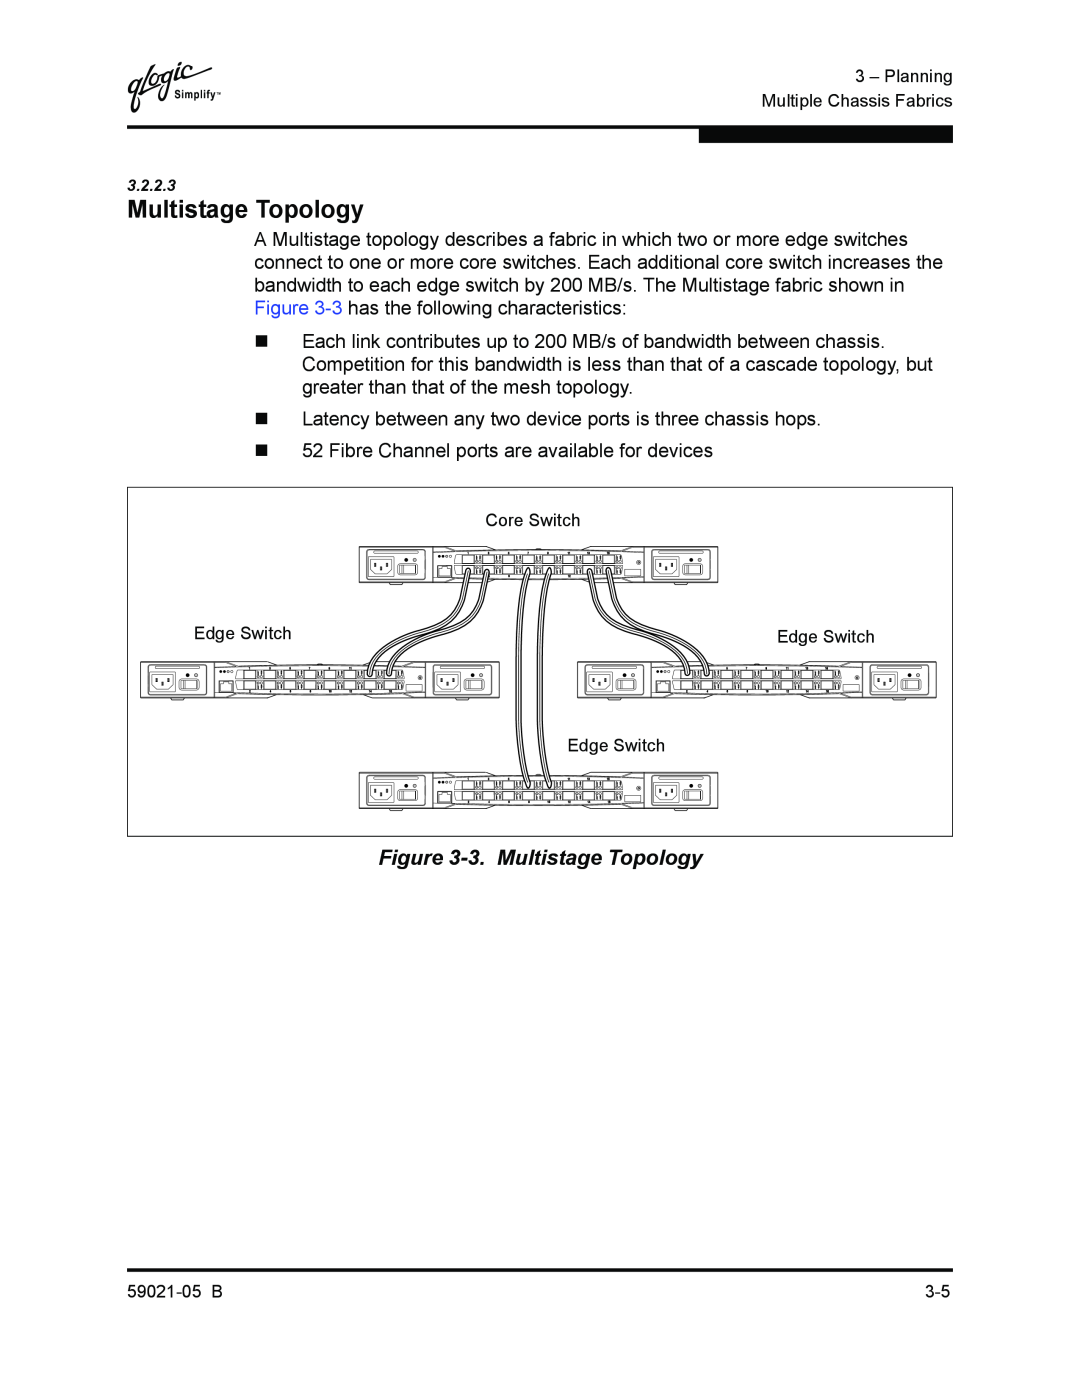 Q-Logic 59021-05 B manual 3. Multistage Topology 